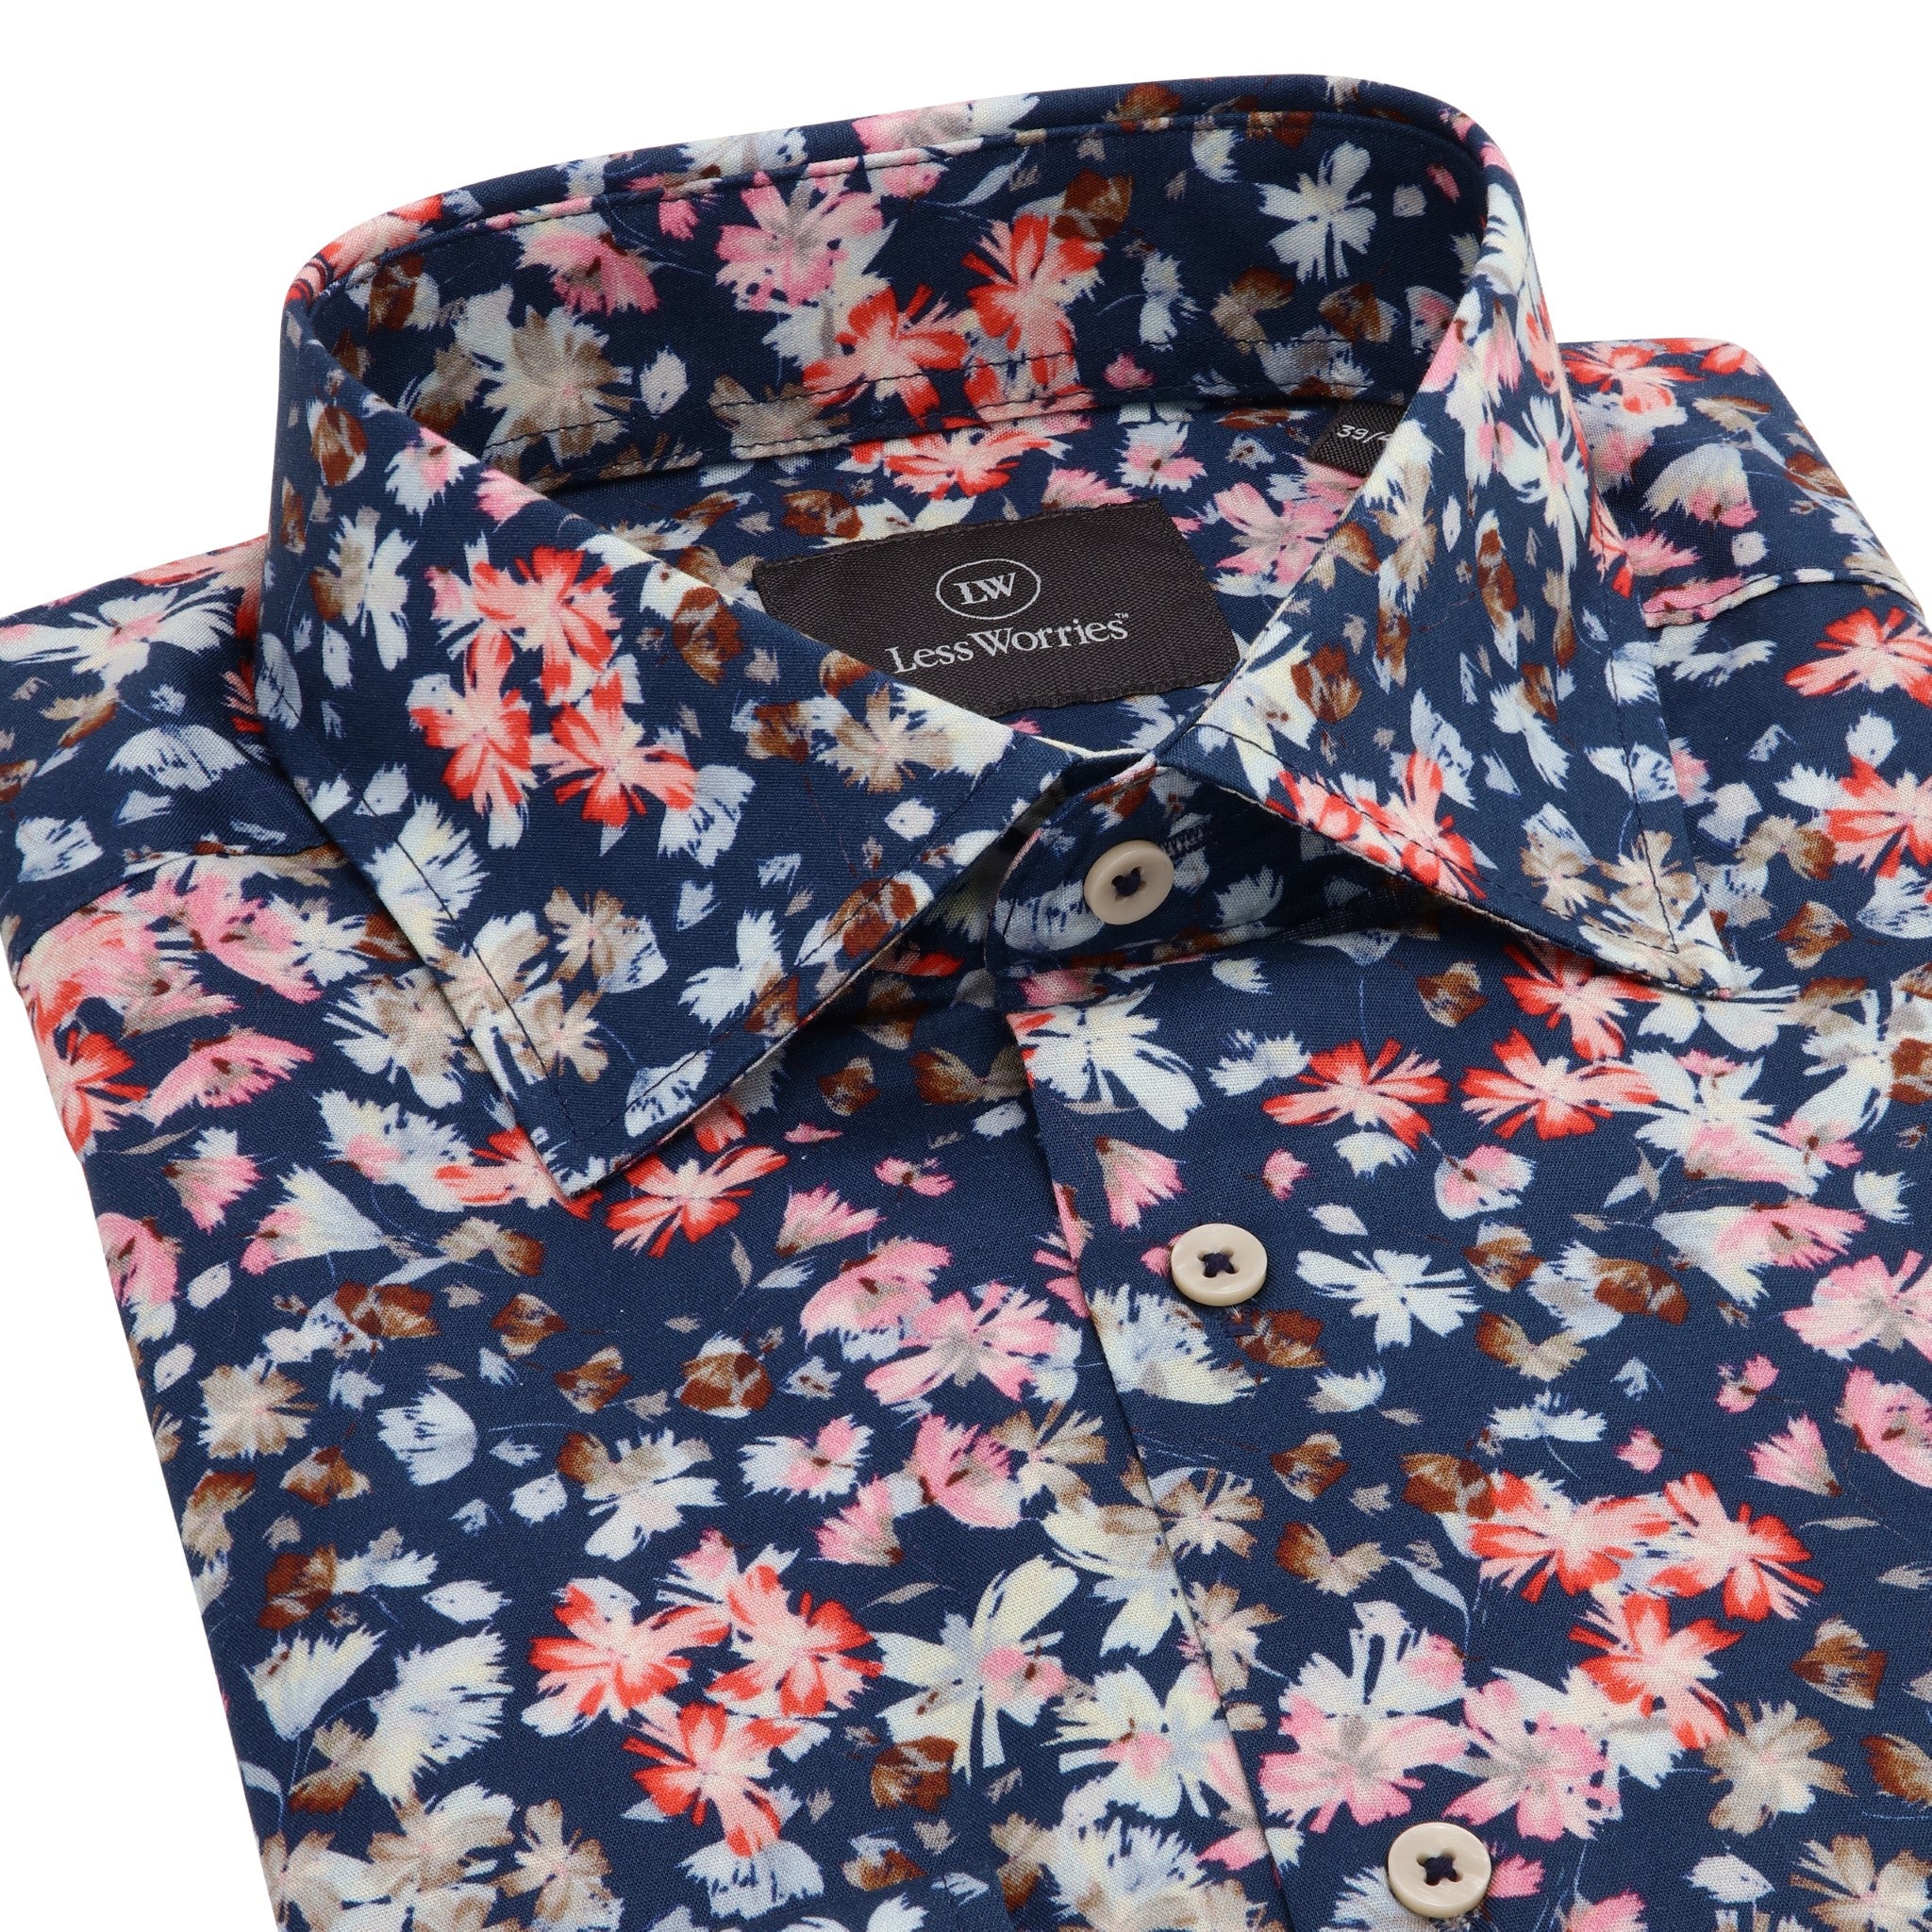 Marinblå Blomönstrad Premium Twill-skjorta